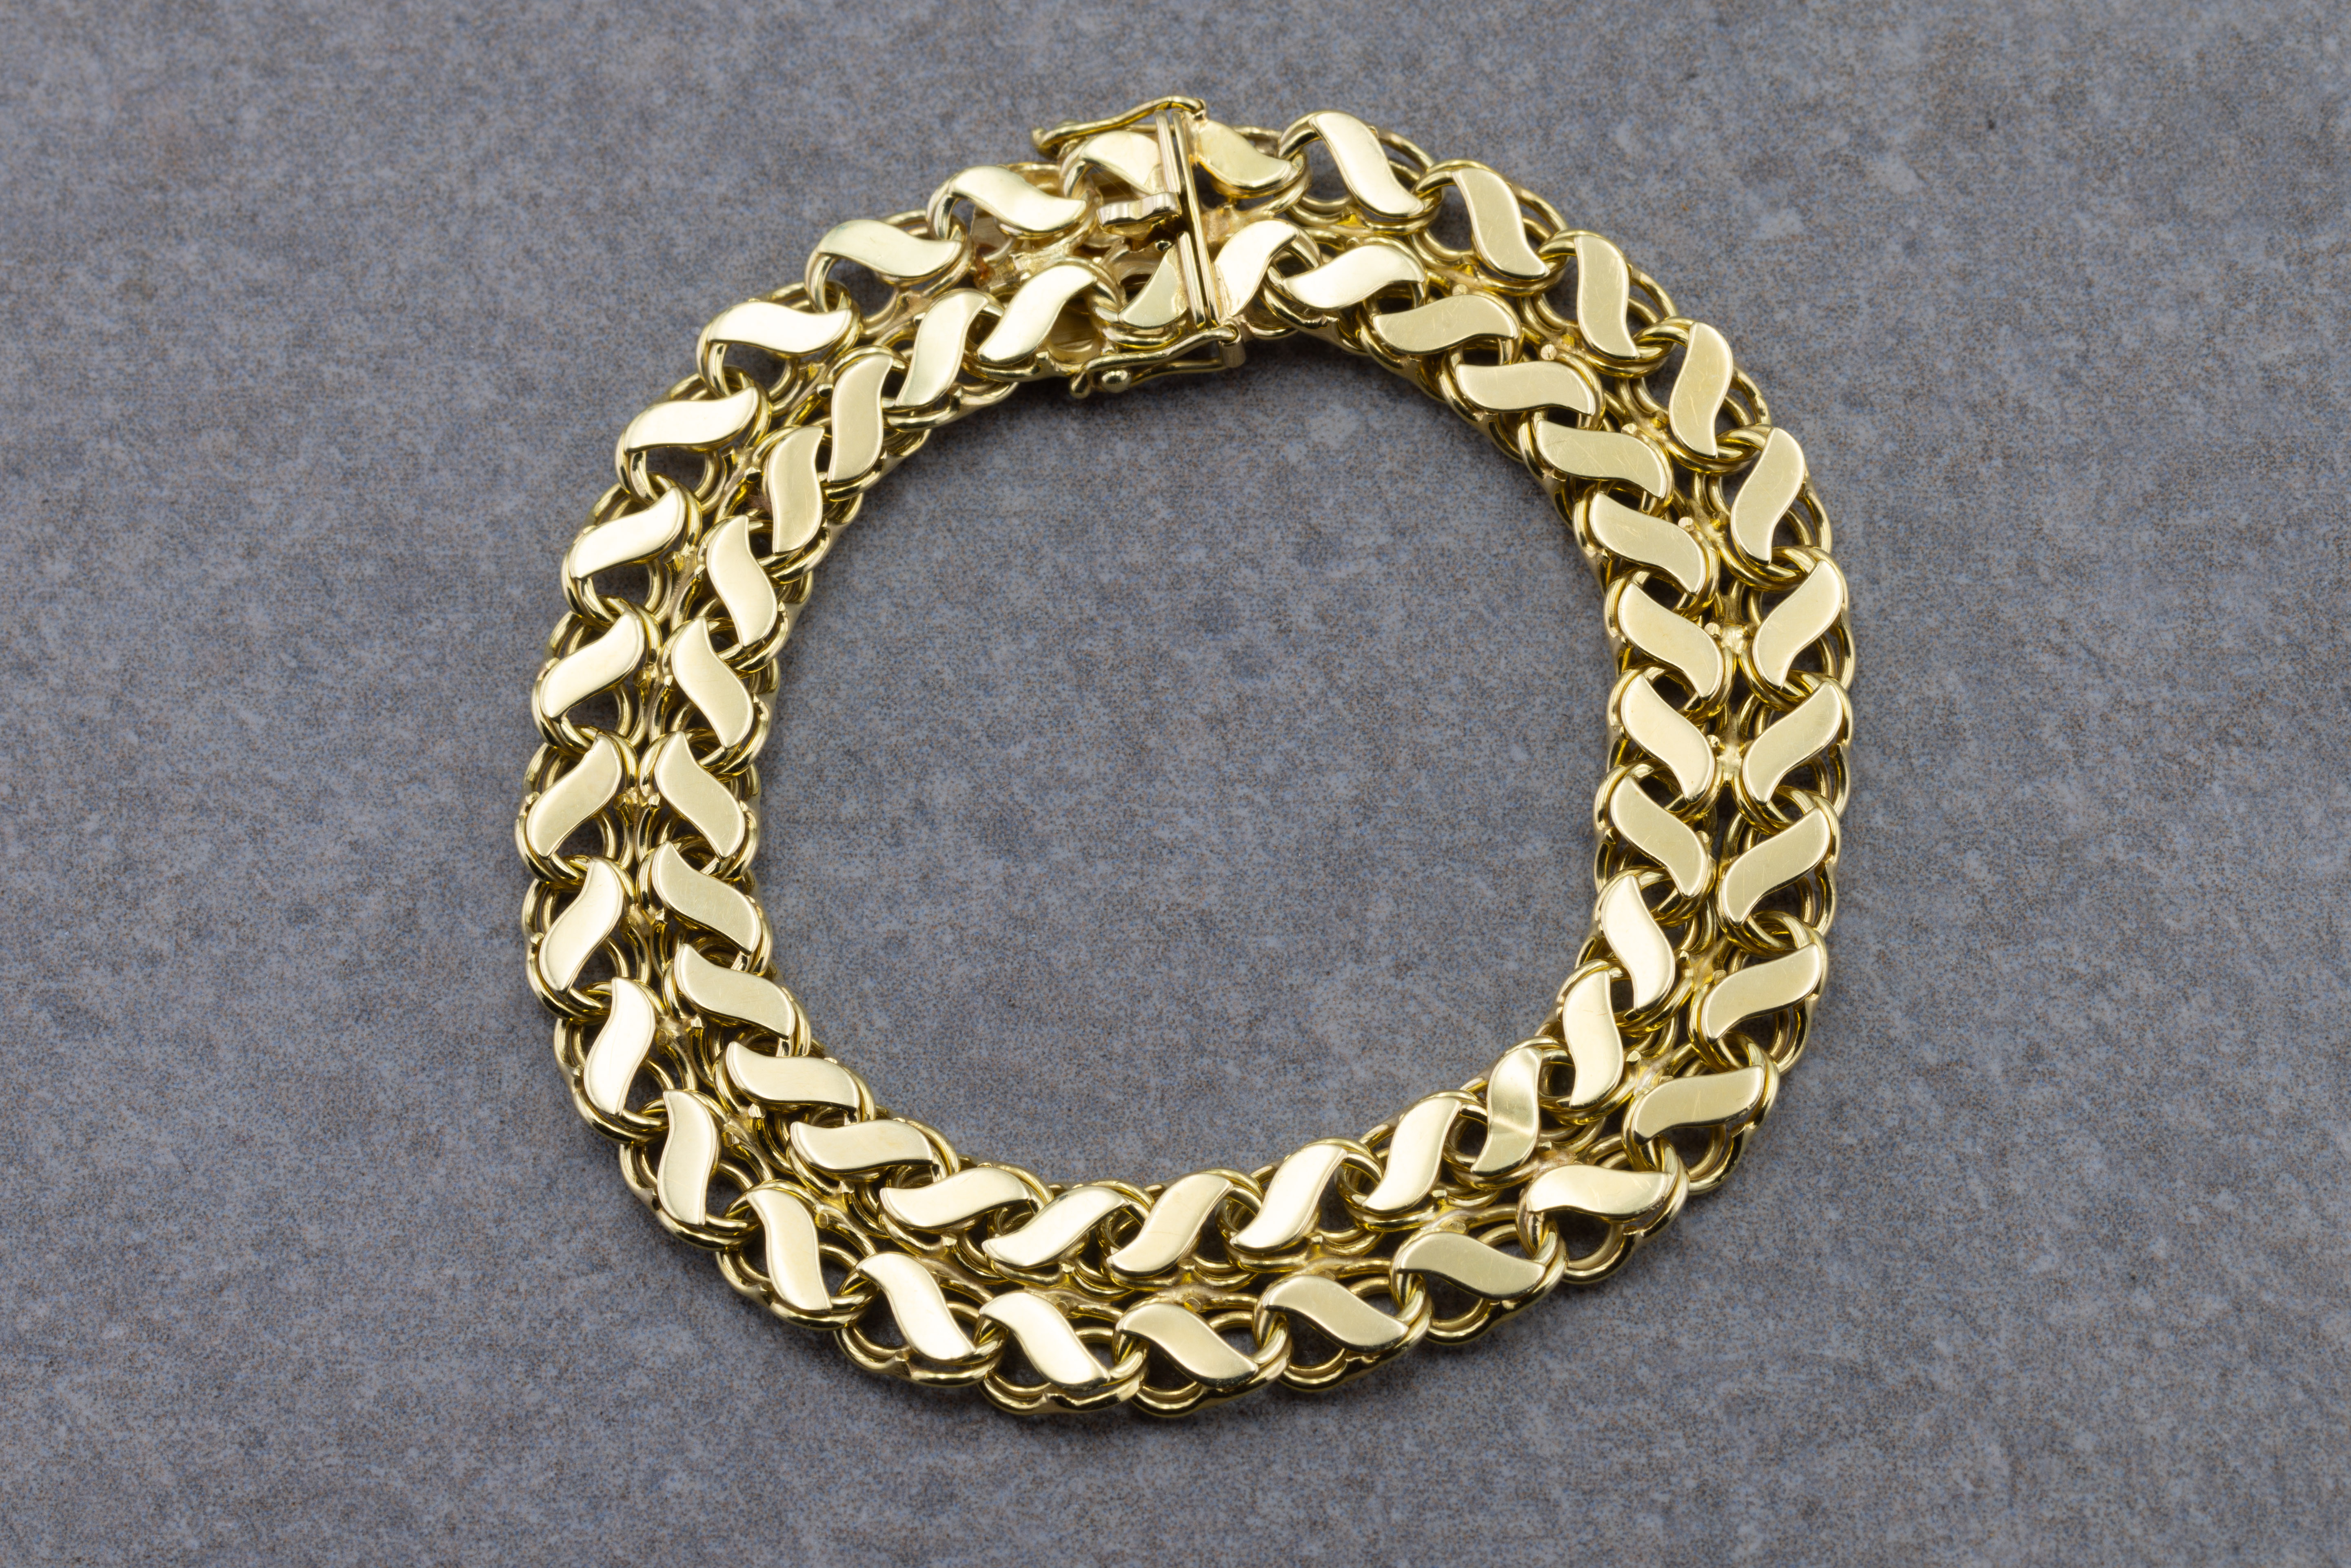 A 14ct yellow gold bracelet